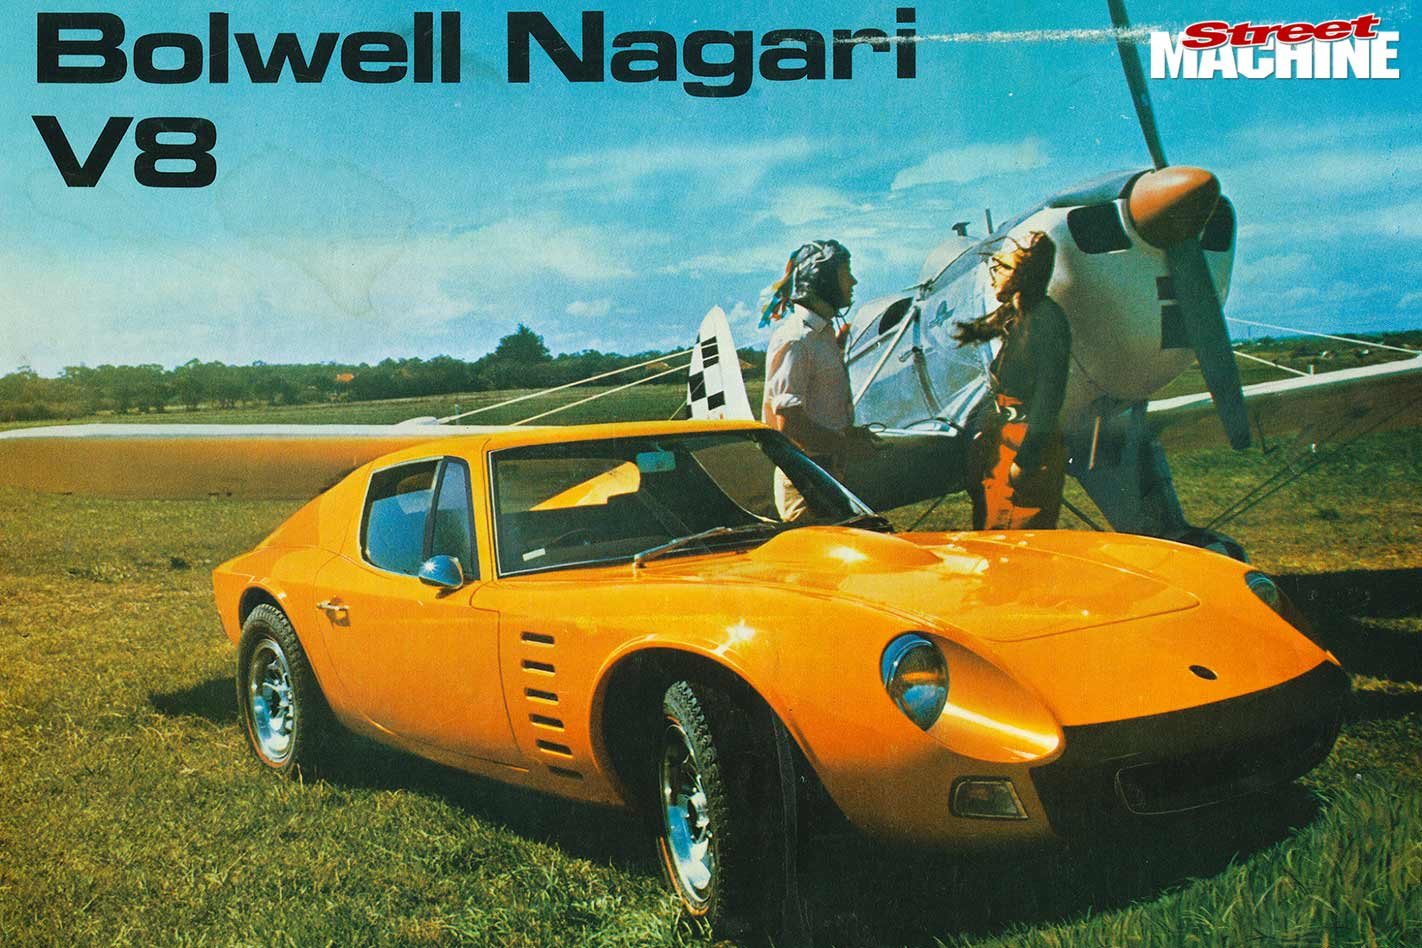 Bolwell Nagari V8